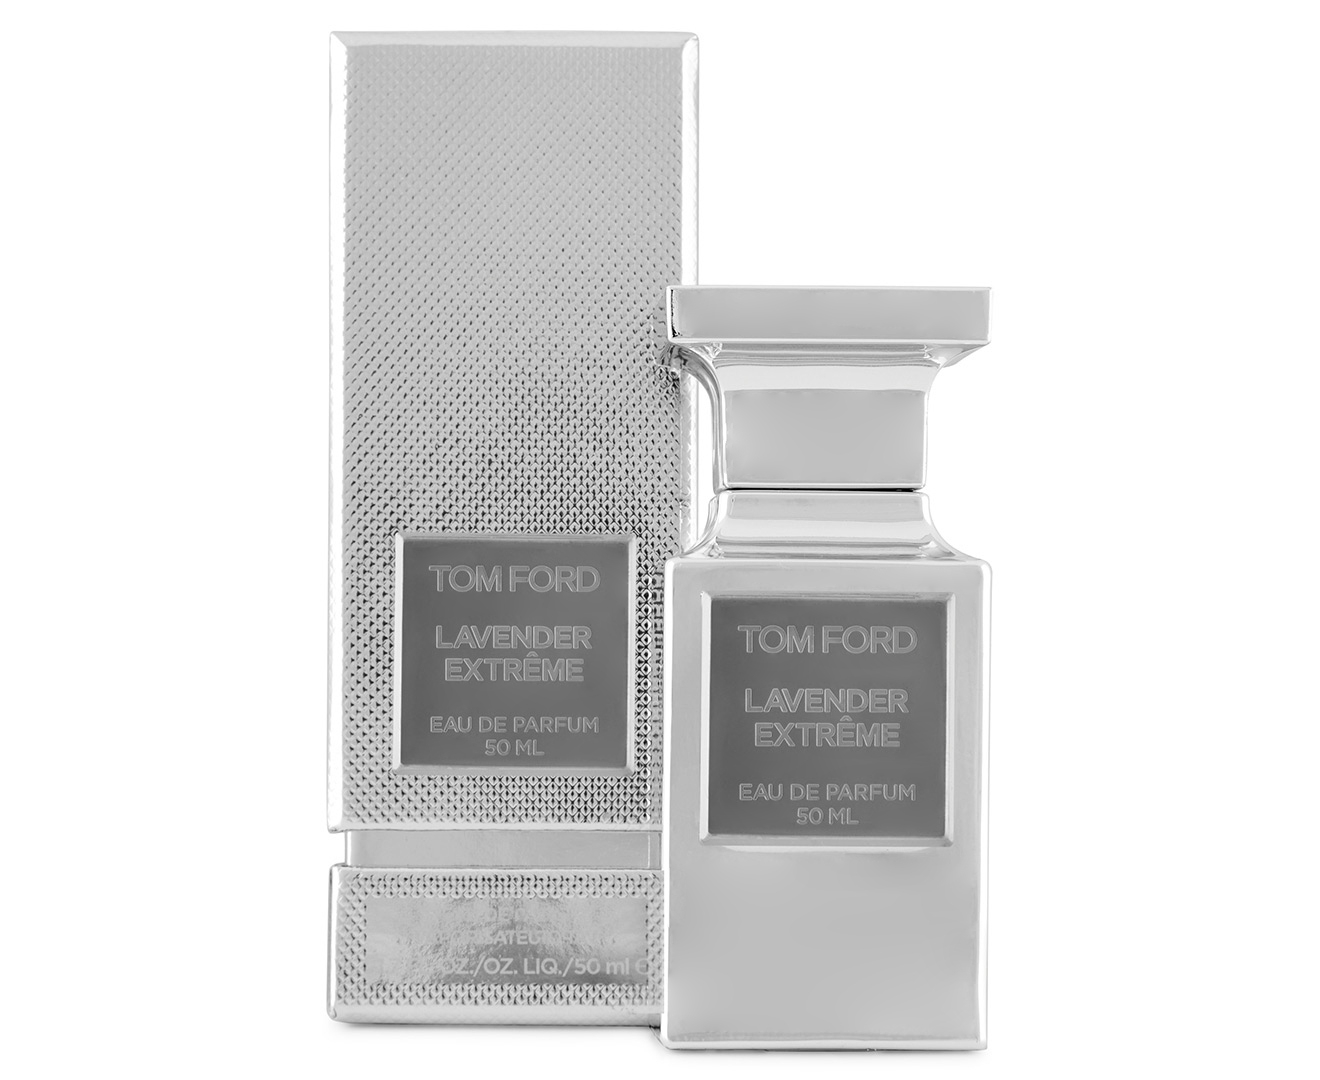 Tom Ford Lavender Extreme EDP Perfume 50mL 